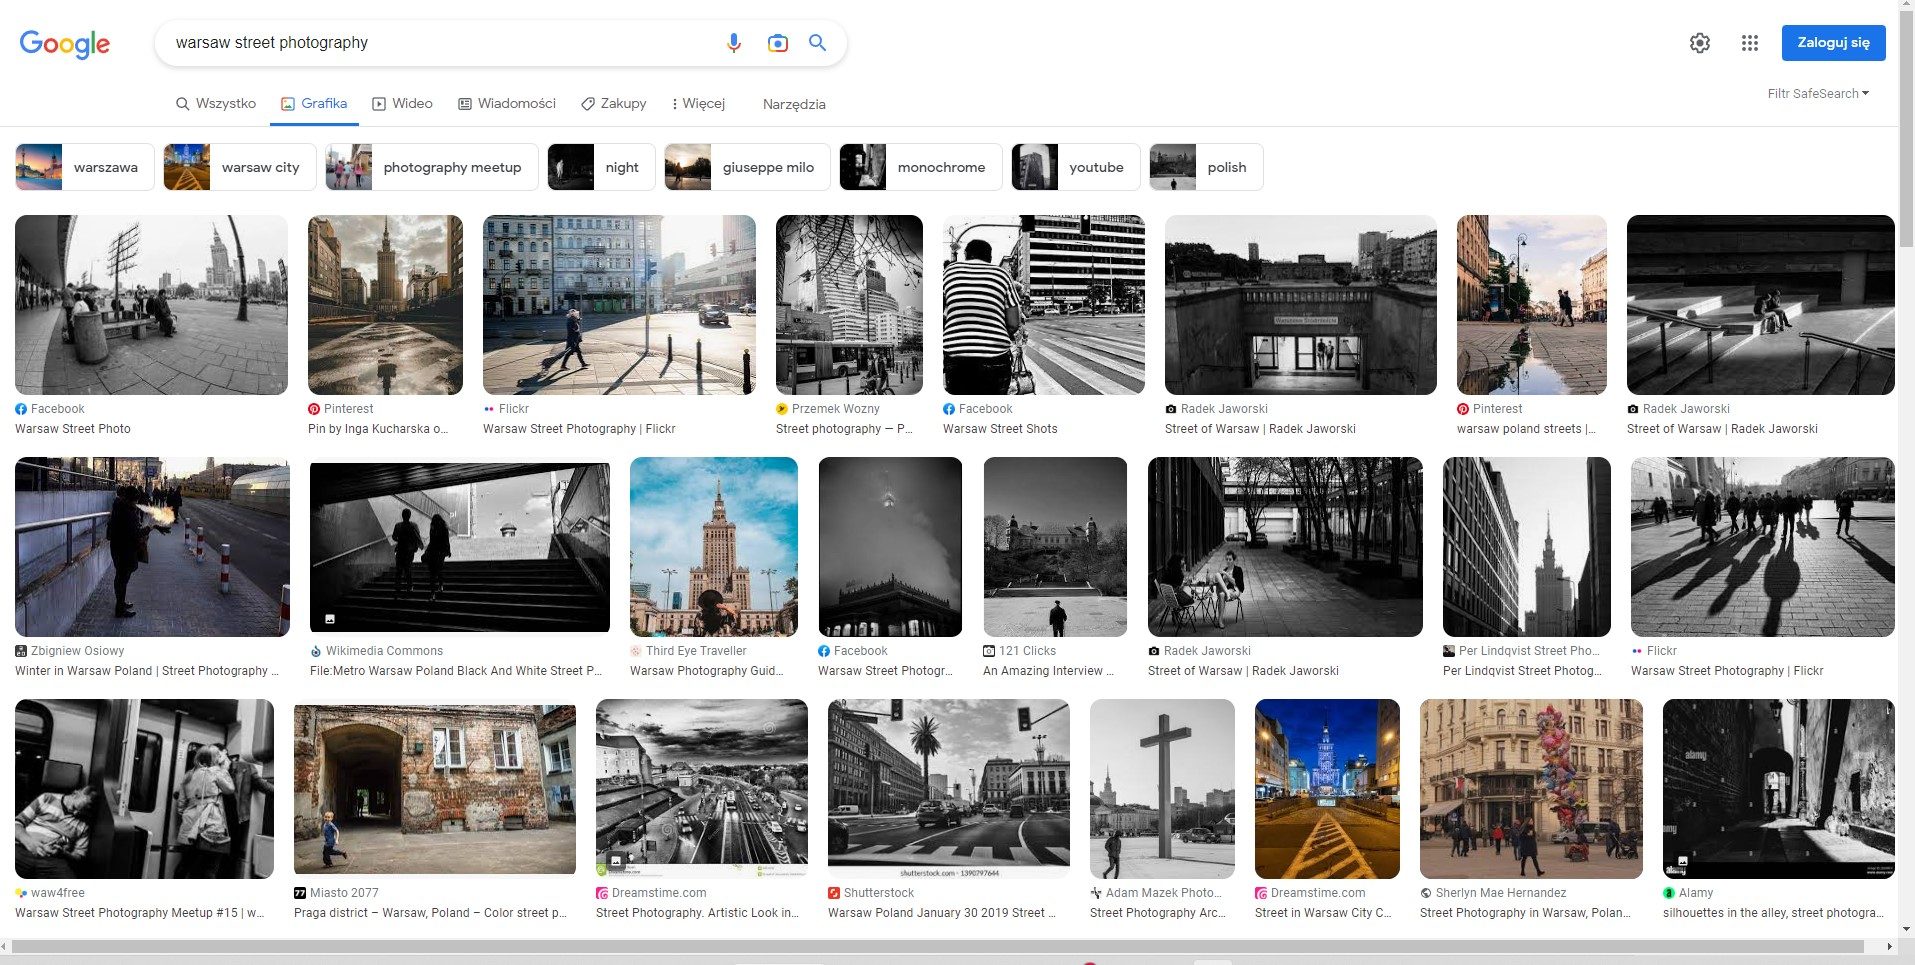 Adam Mazek Photography 2023. Warsaw Street Photography. Post: "Undoubtedly, it's getting better." Google.